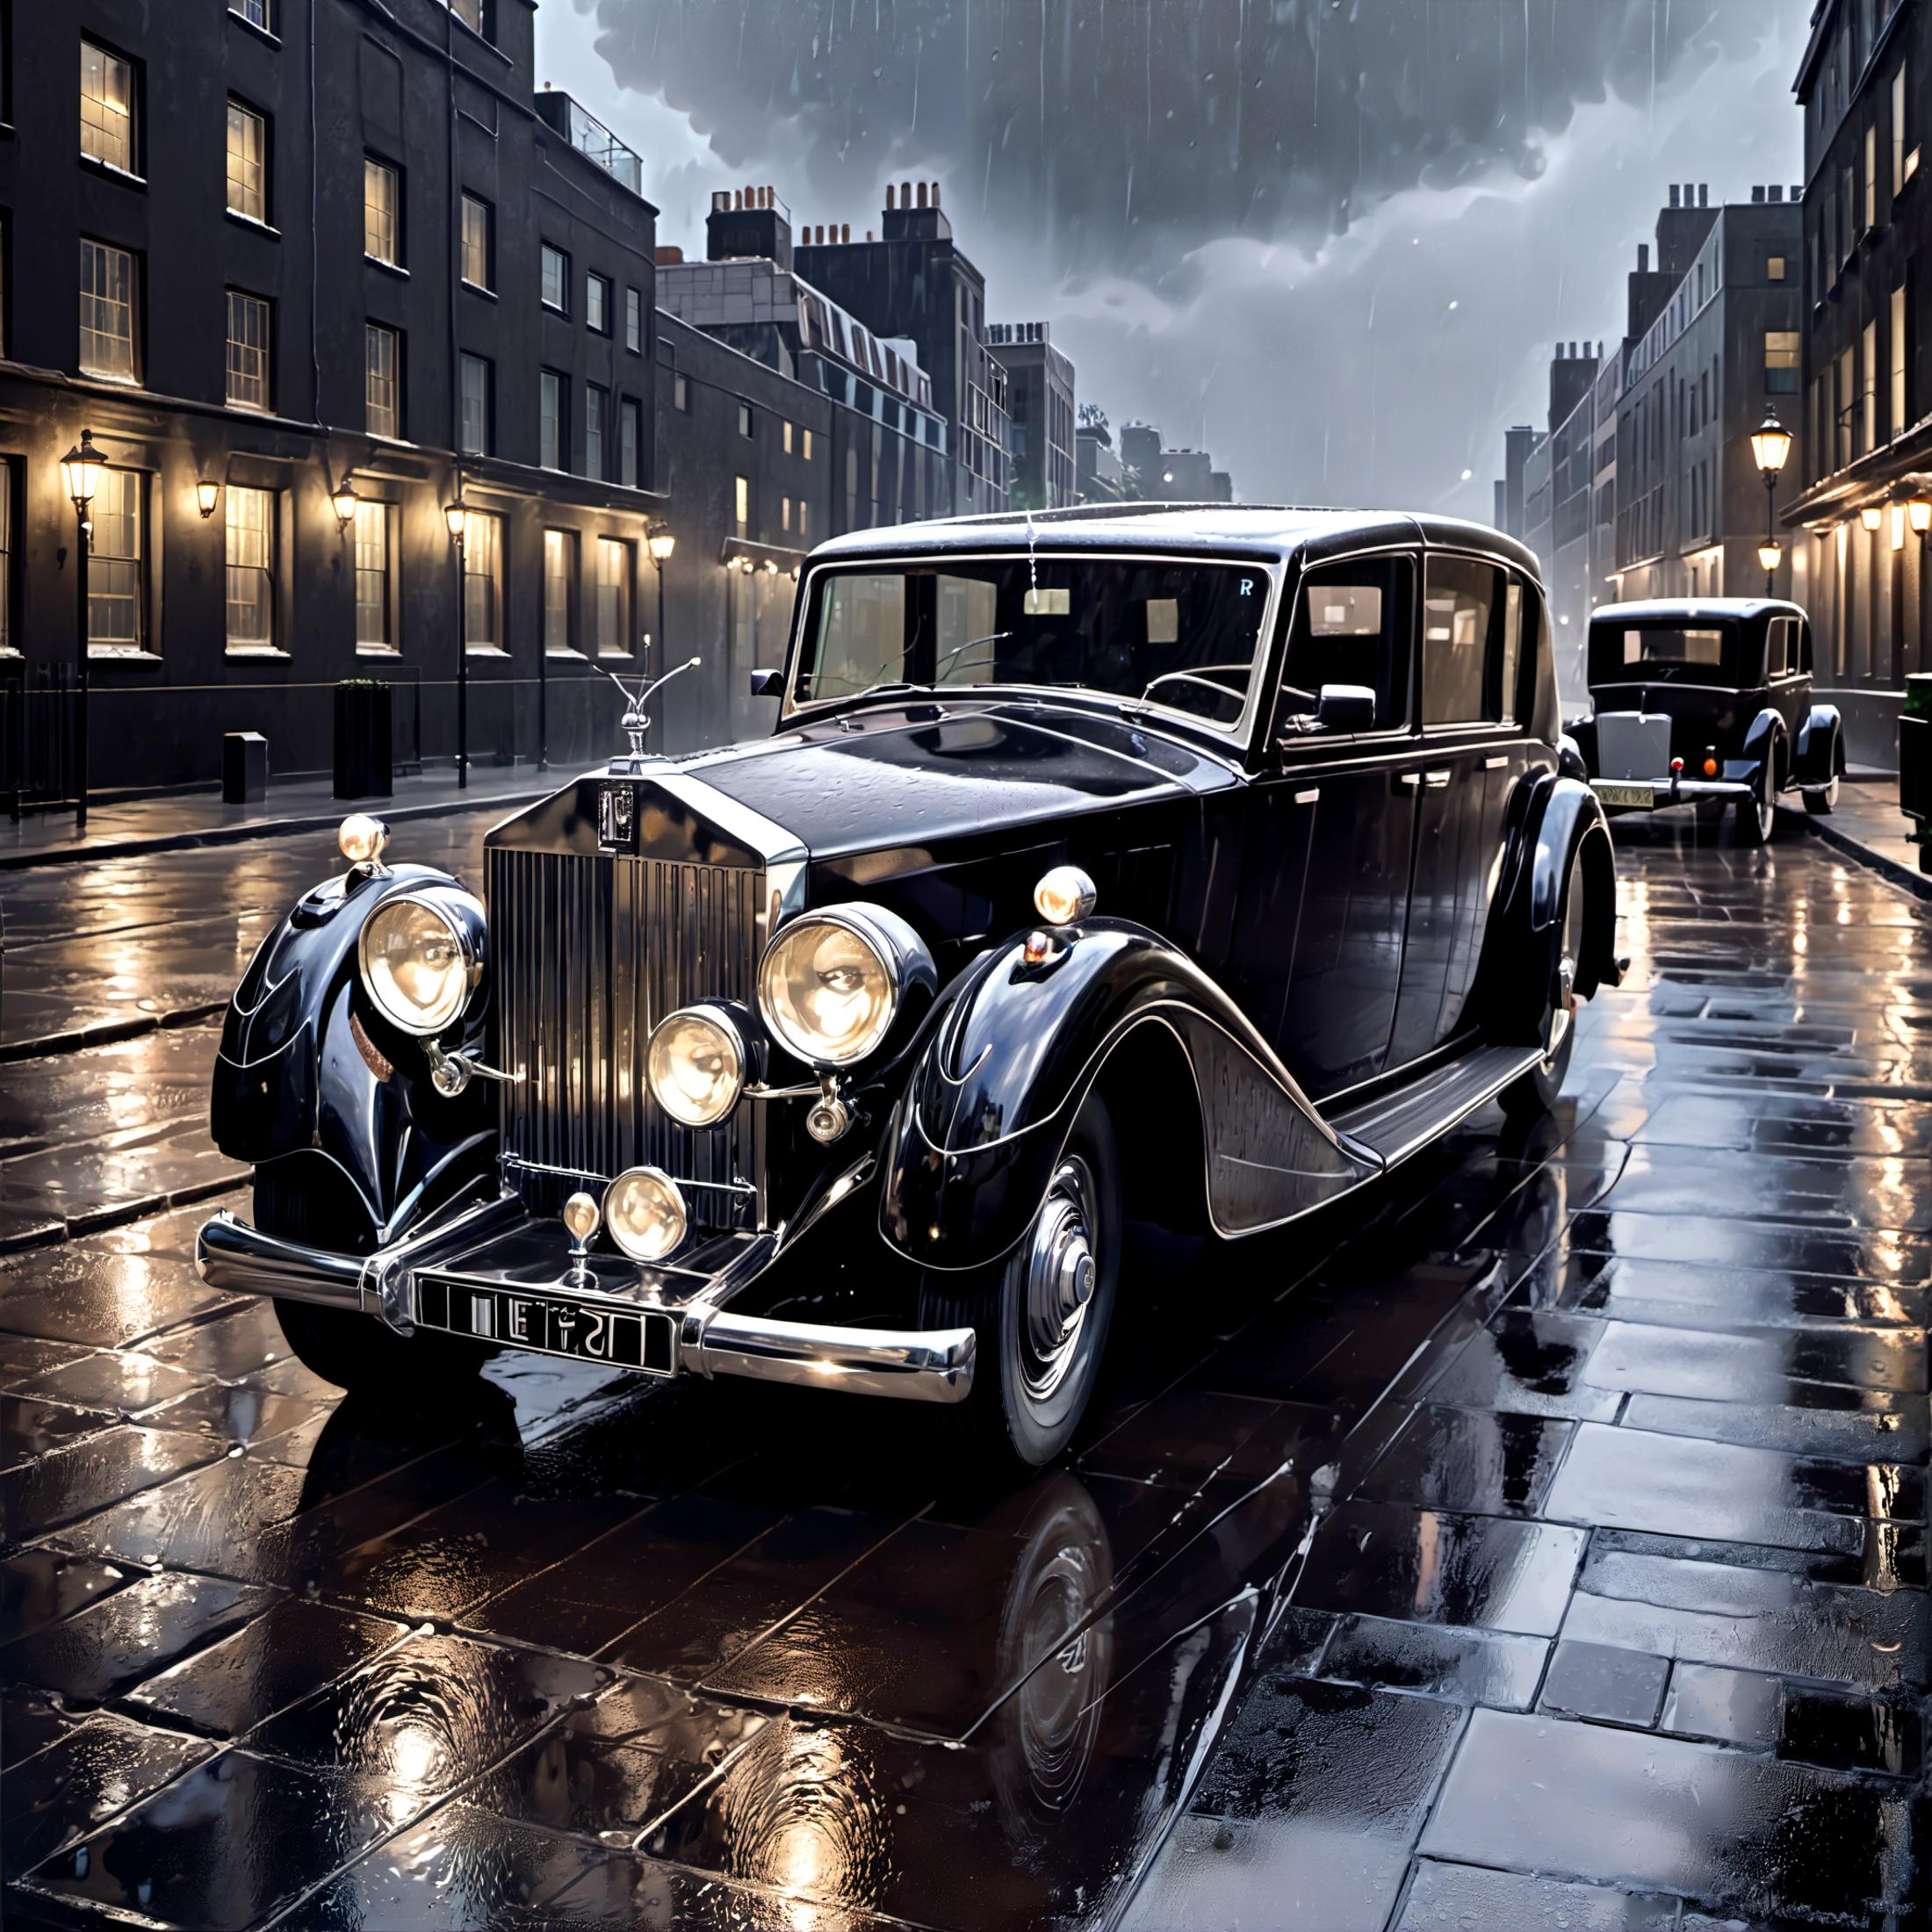 A black vintage car parked on a rain-soaked street.